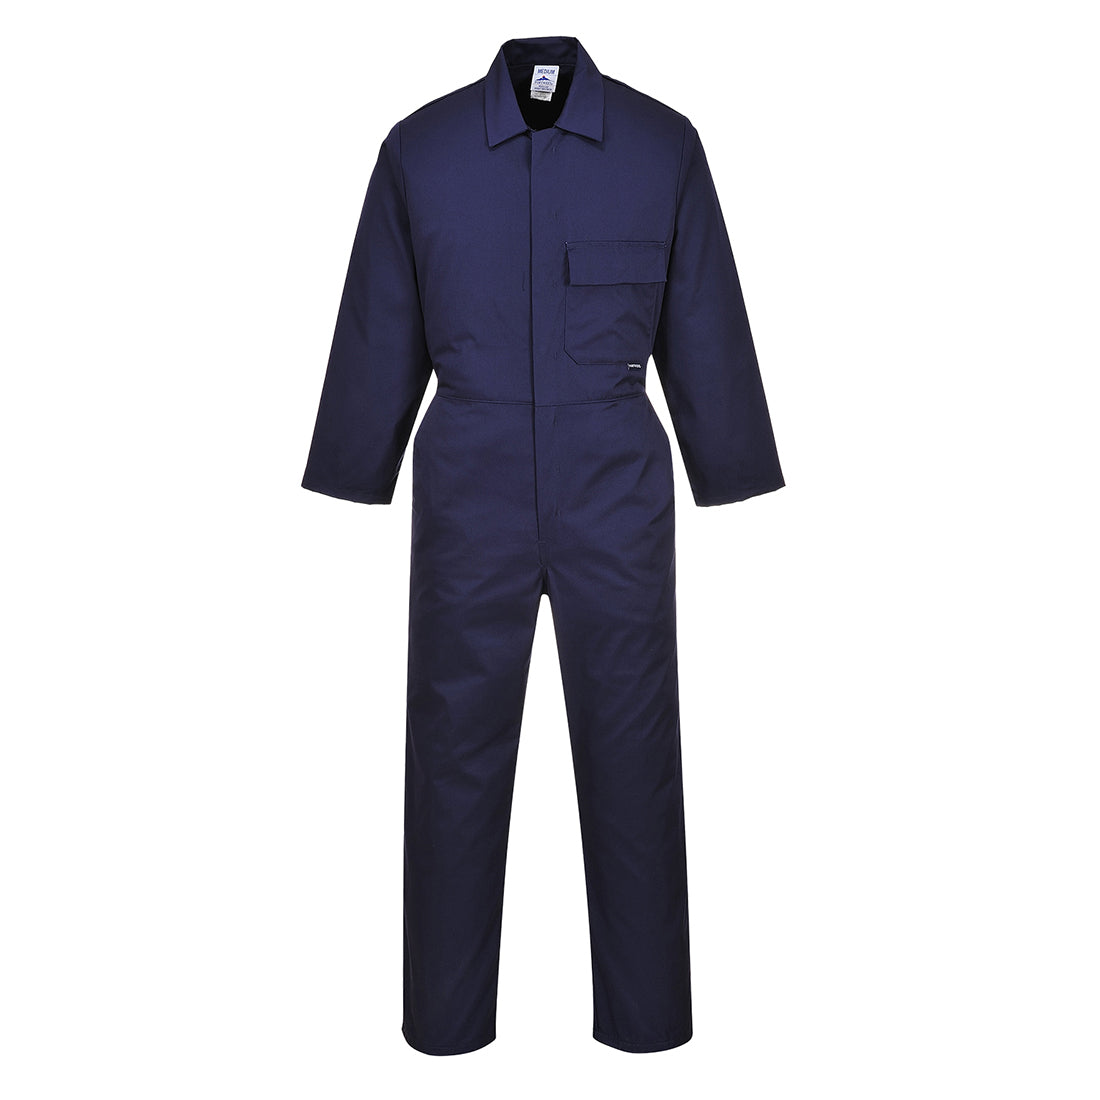 Portwest 2802 - Navy Standard Coverall boiler suit sz Large Regular